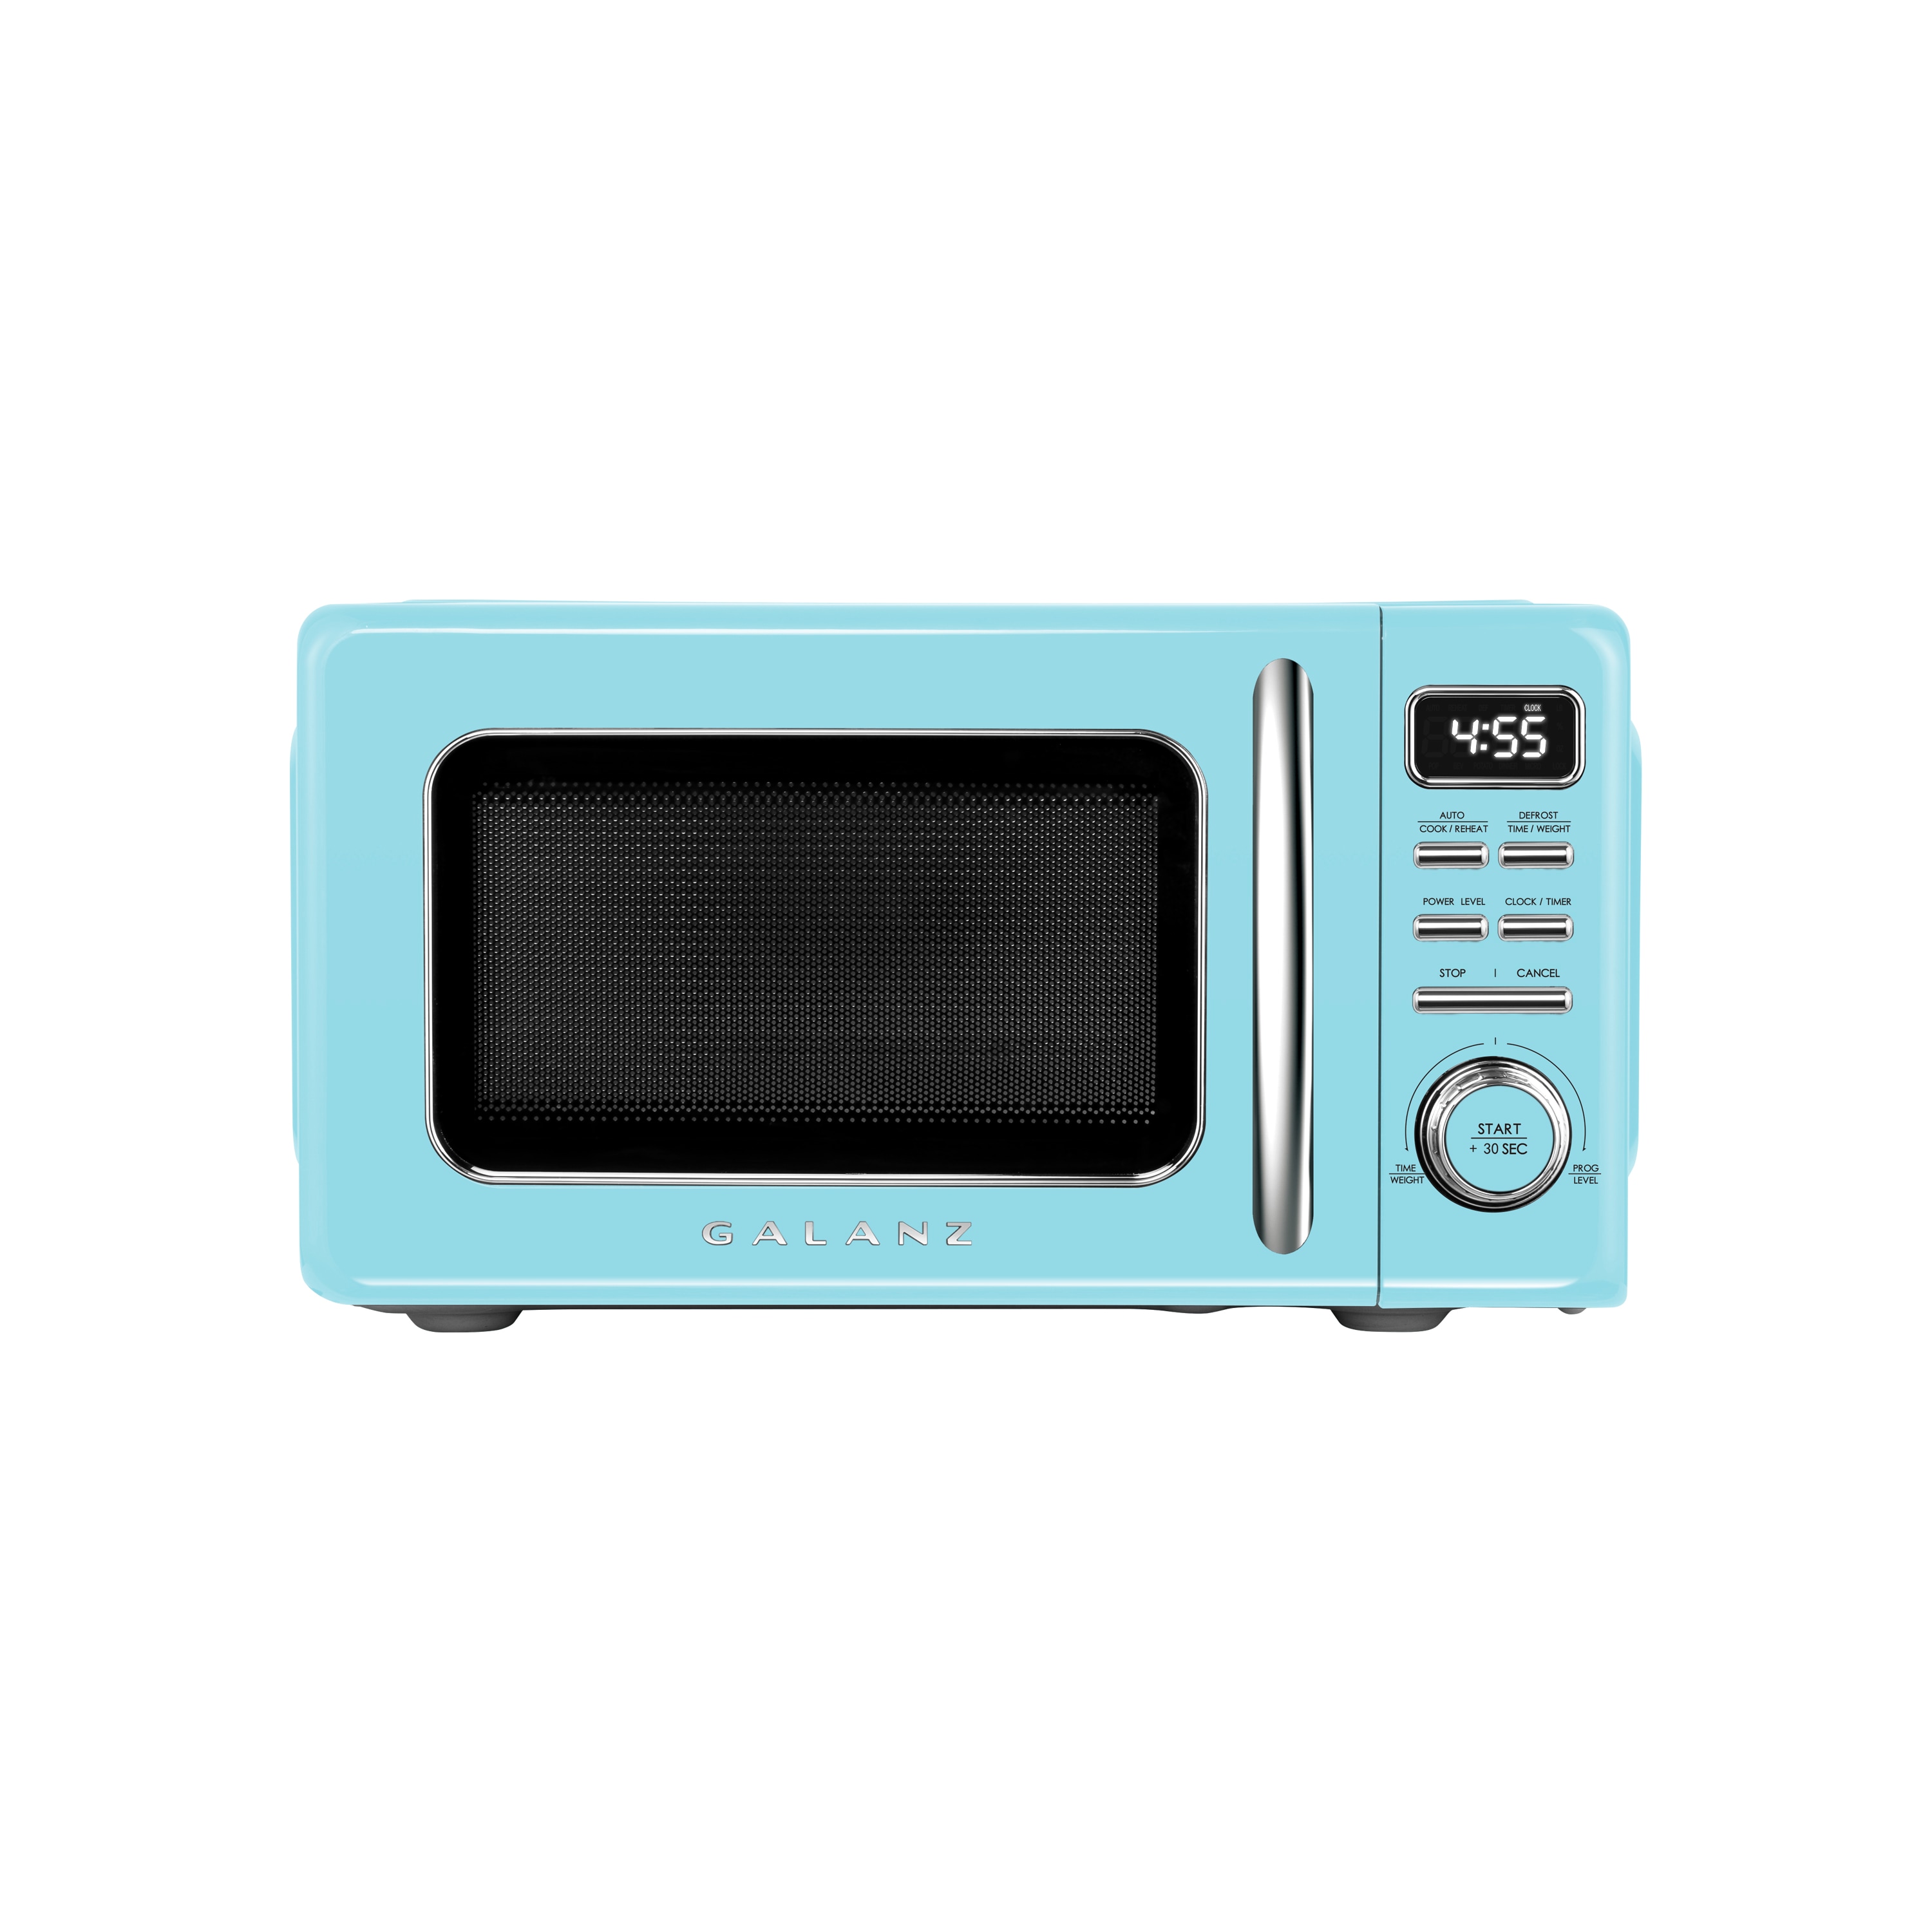 Nostalgia Retro 0.7 Cu. ft. 700-Watt Countertop Microwave Oven - Black